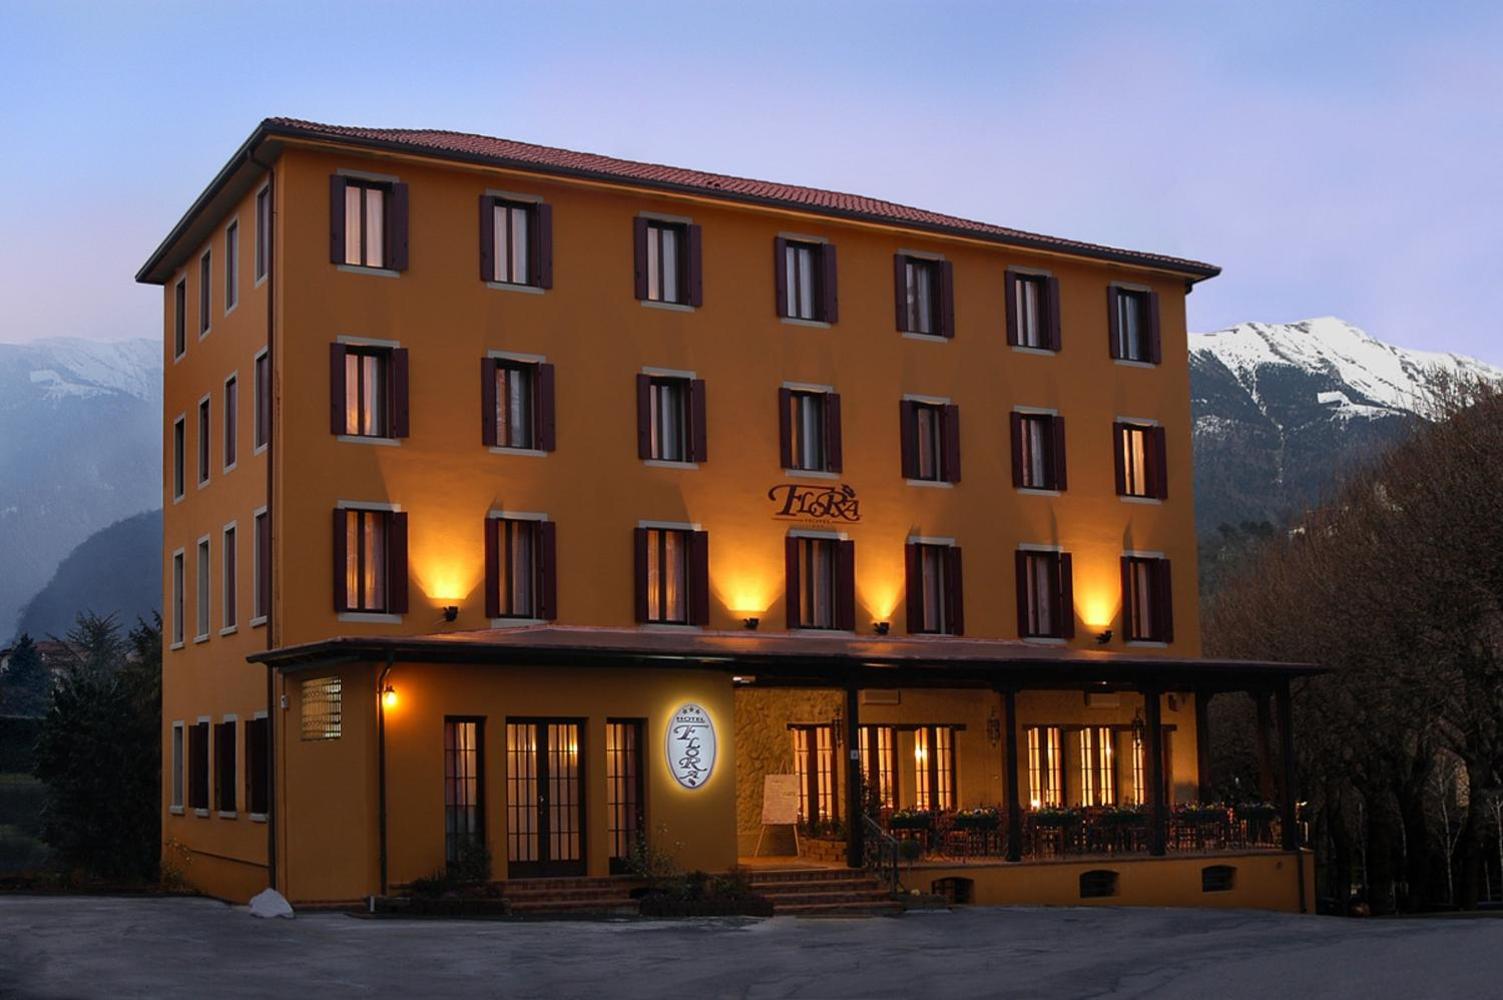 Hotel Flora in Vittorio Veneto Italy